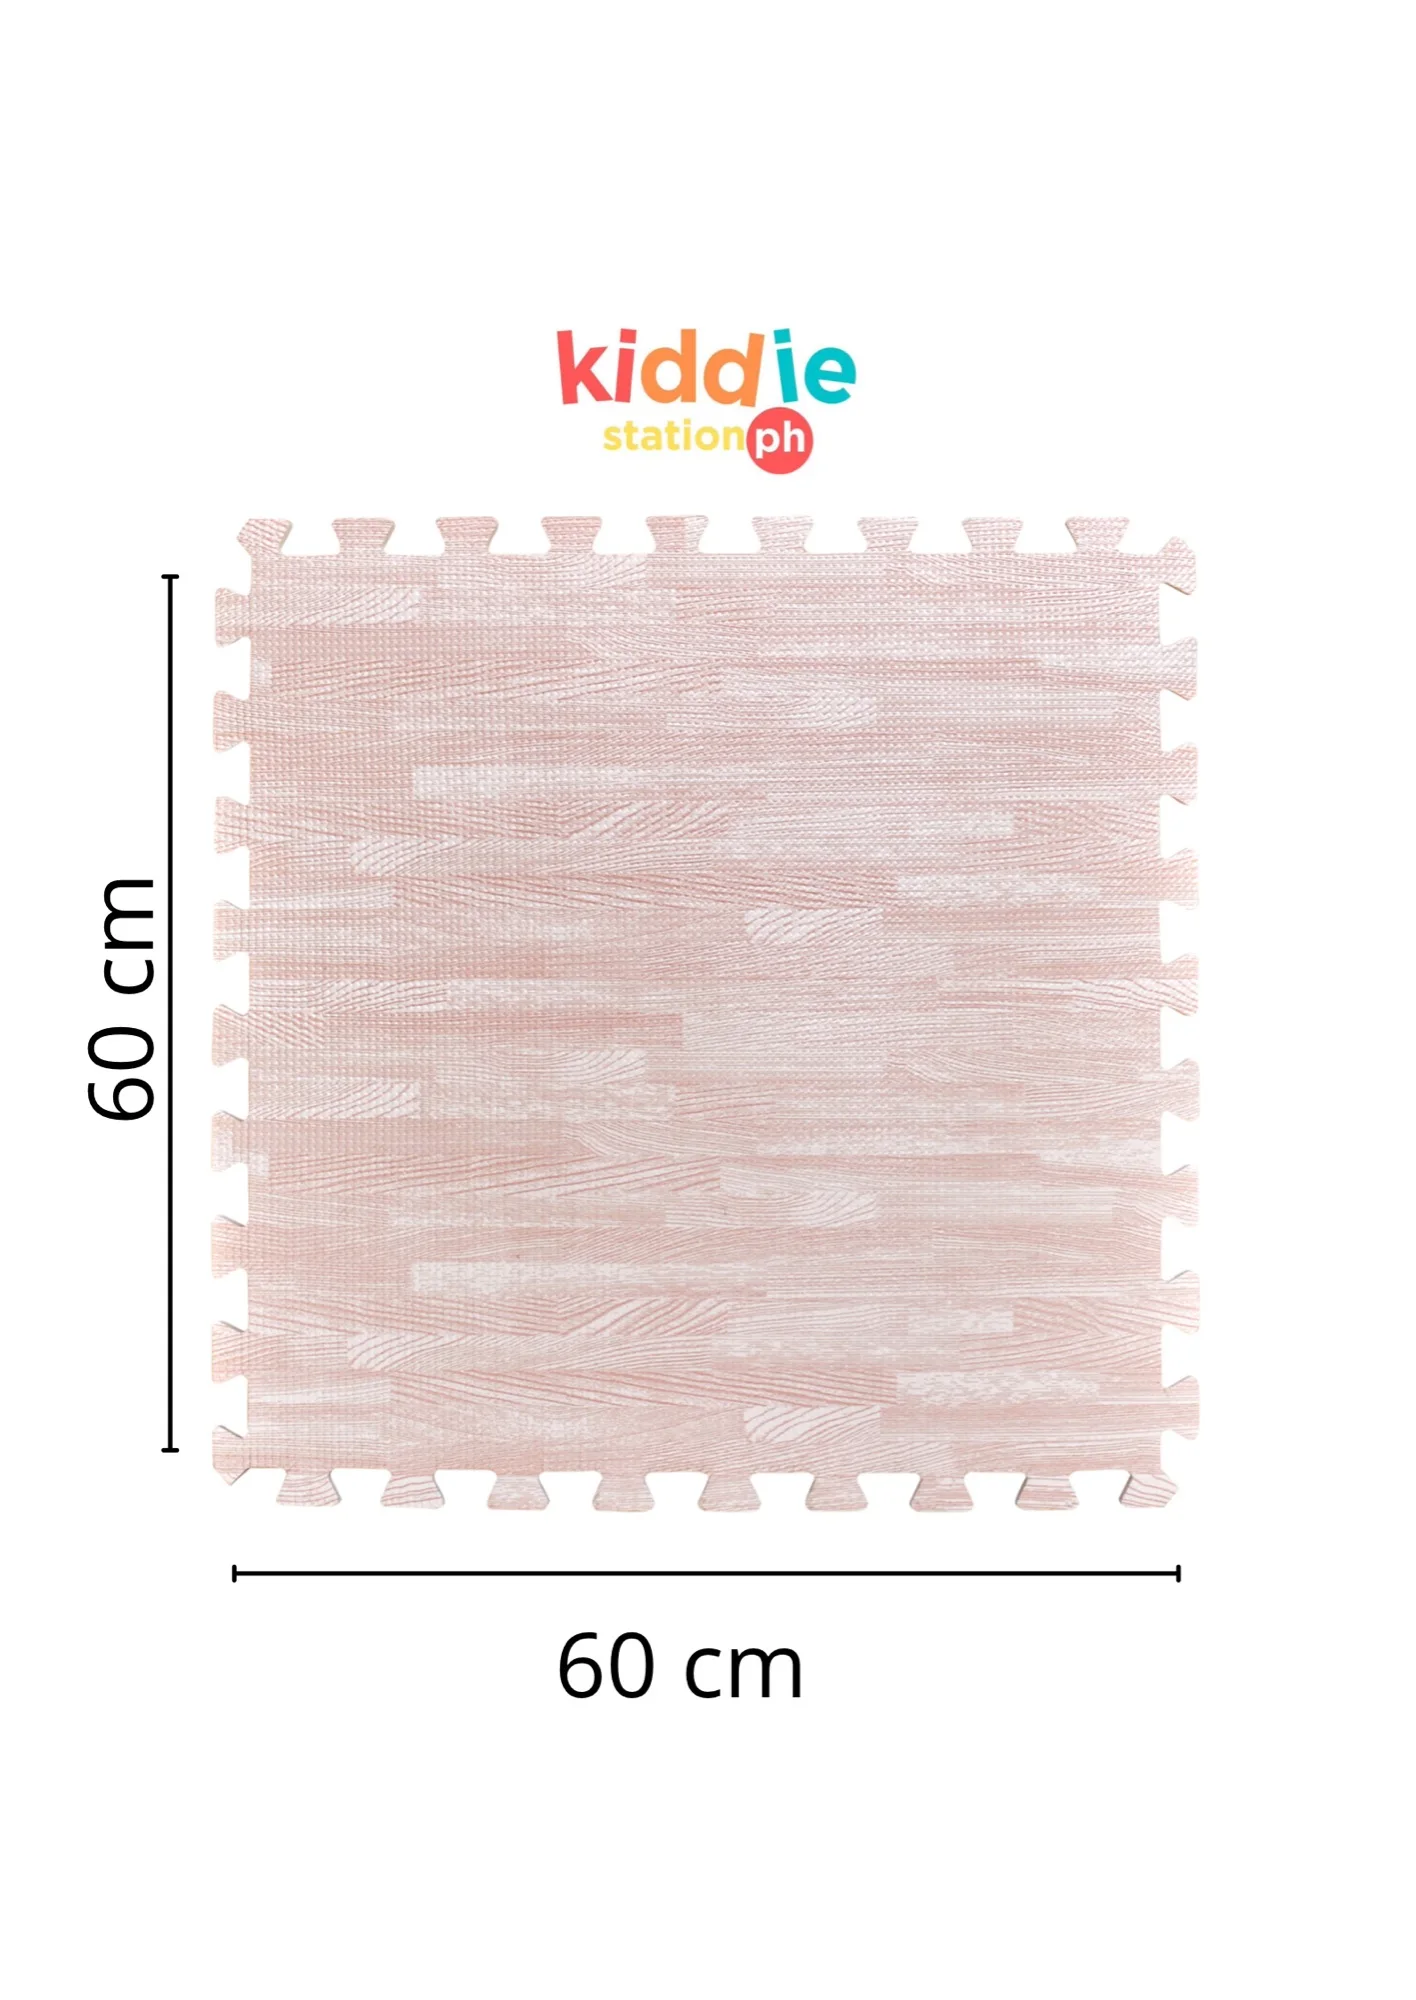 Kiddiestationph 60 x 60 Children/Baby Light Wood Design XL Puzzle Playmat 8 PCS